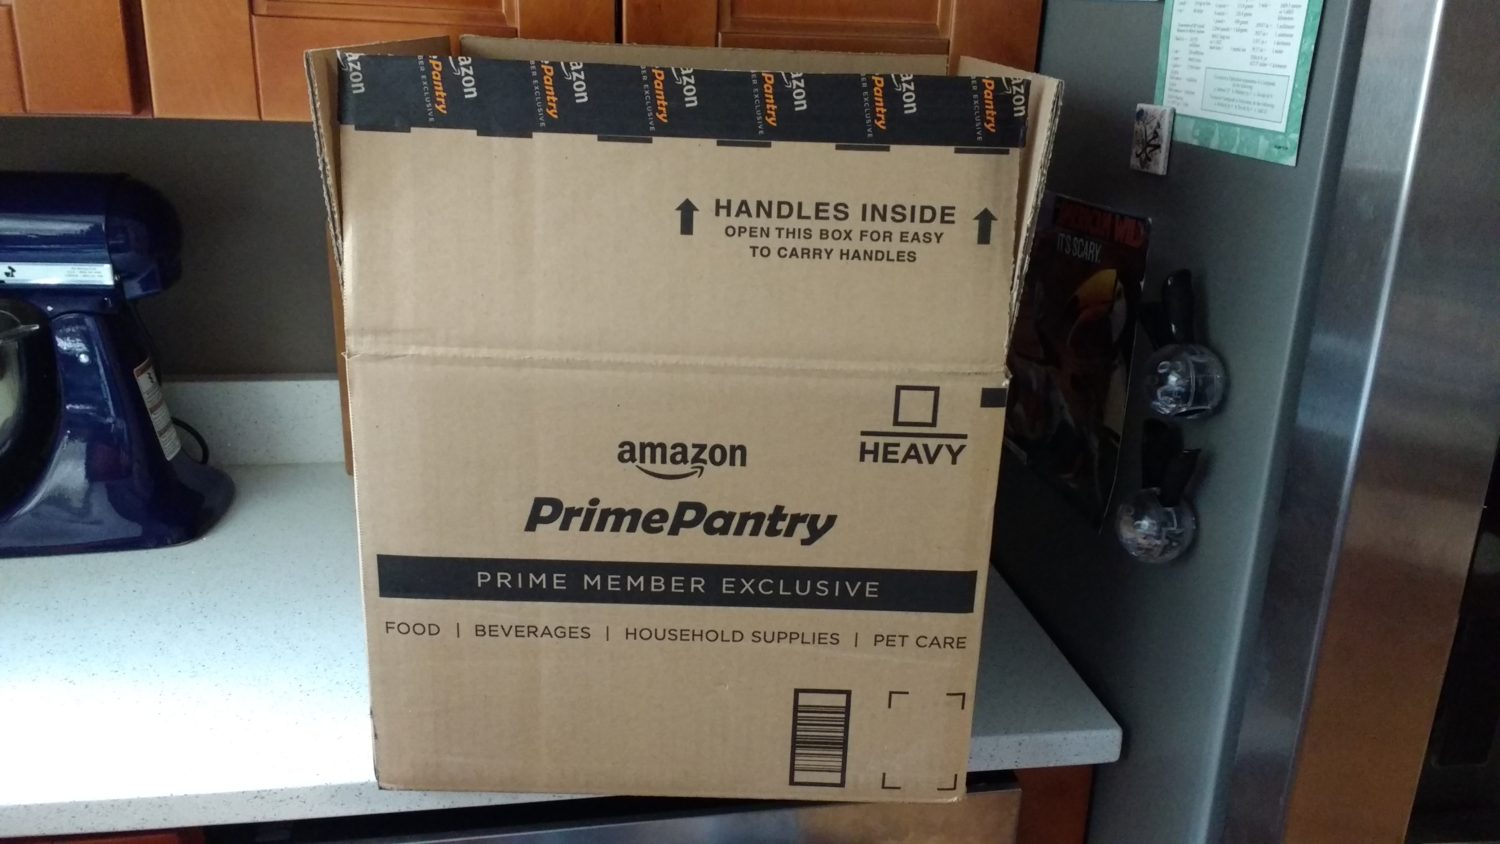 Amazon Prime Pantry box open on counter